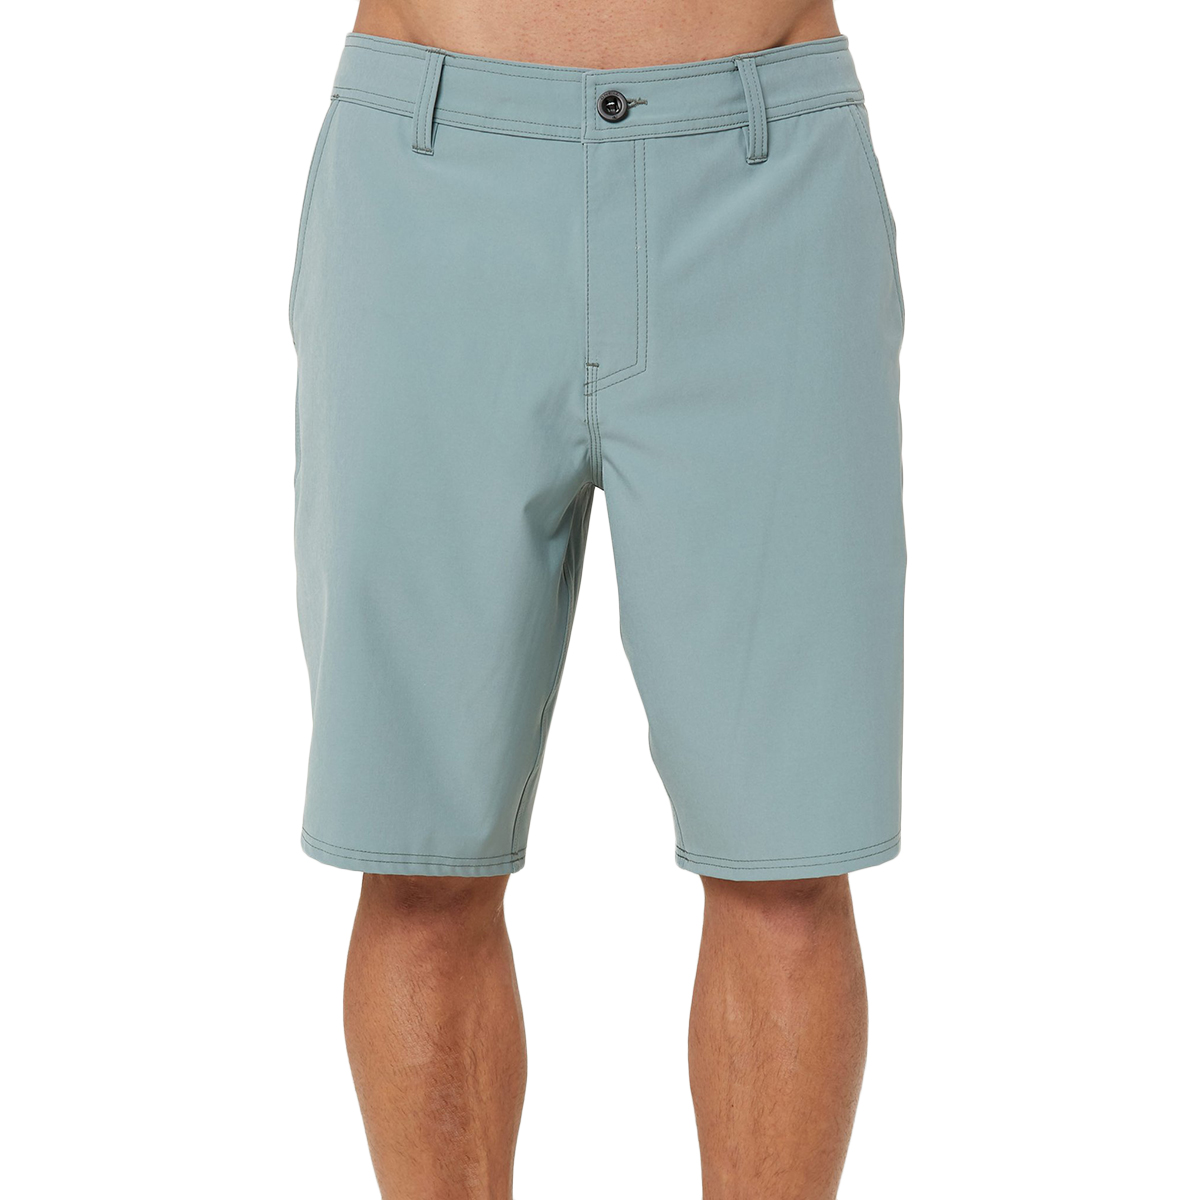 O'neill Men's Loaded Reserve Hybrid Shorts - Blue, 36